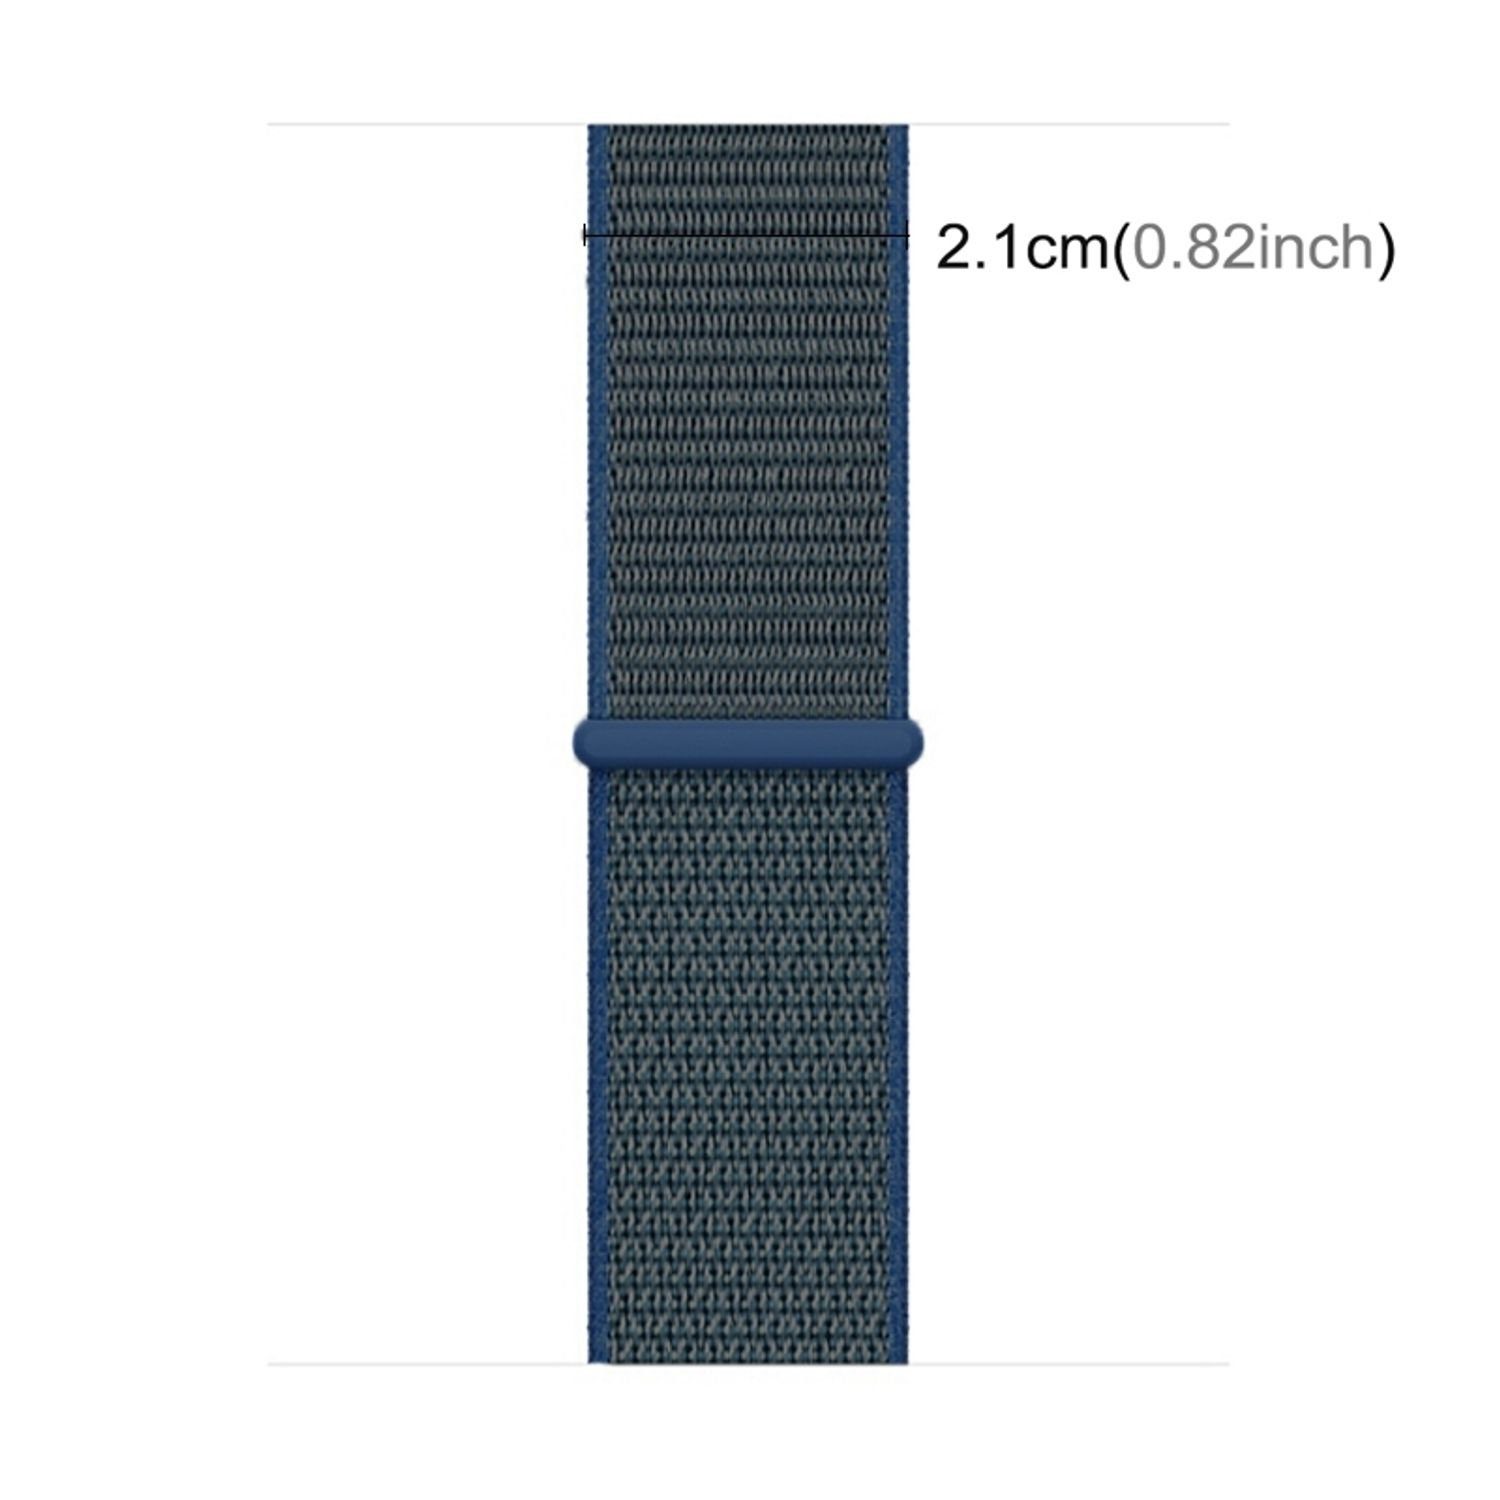 König Design Smartwatch-Armband 38 Sport Blau Dunkel mm Nylon mm / 40 41 Loop Band / mm, Armband Arm